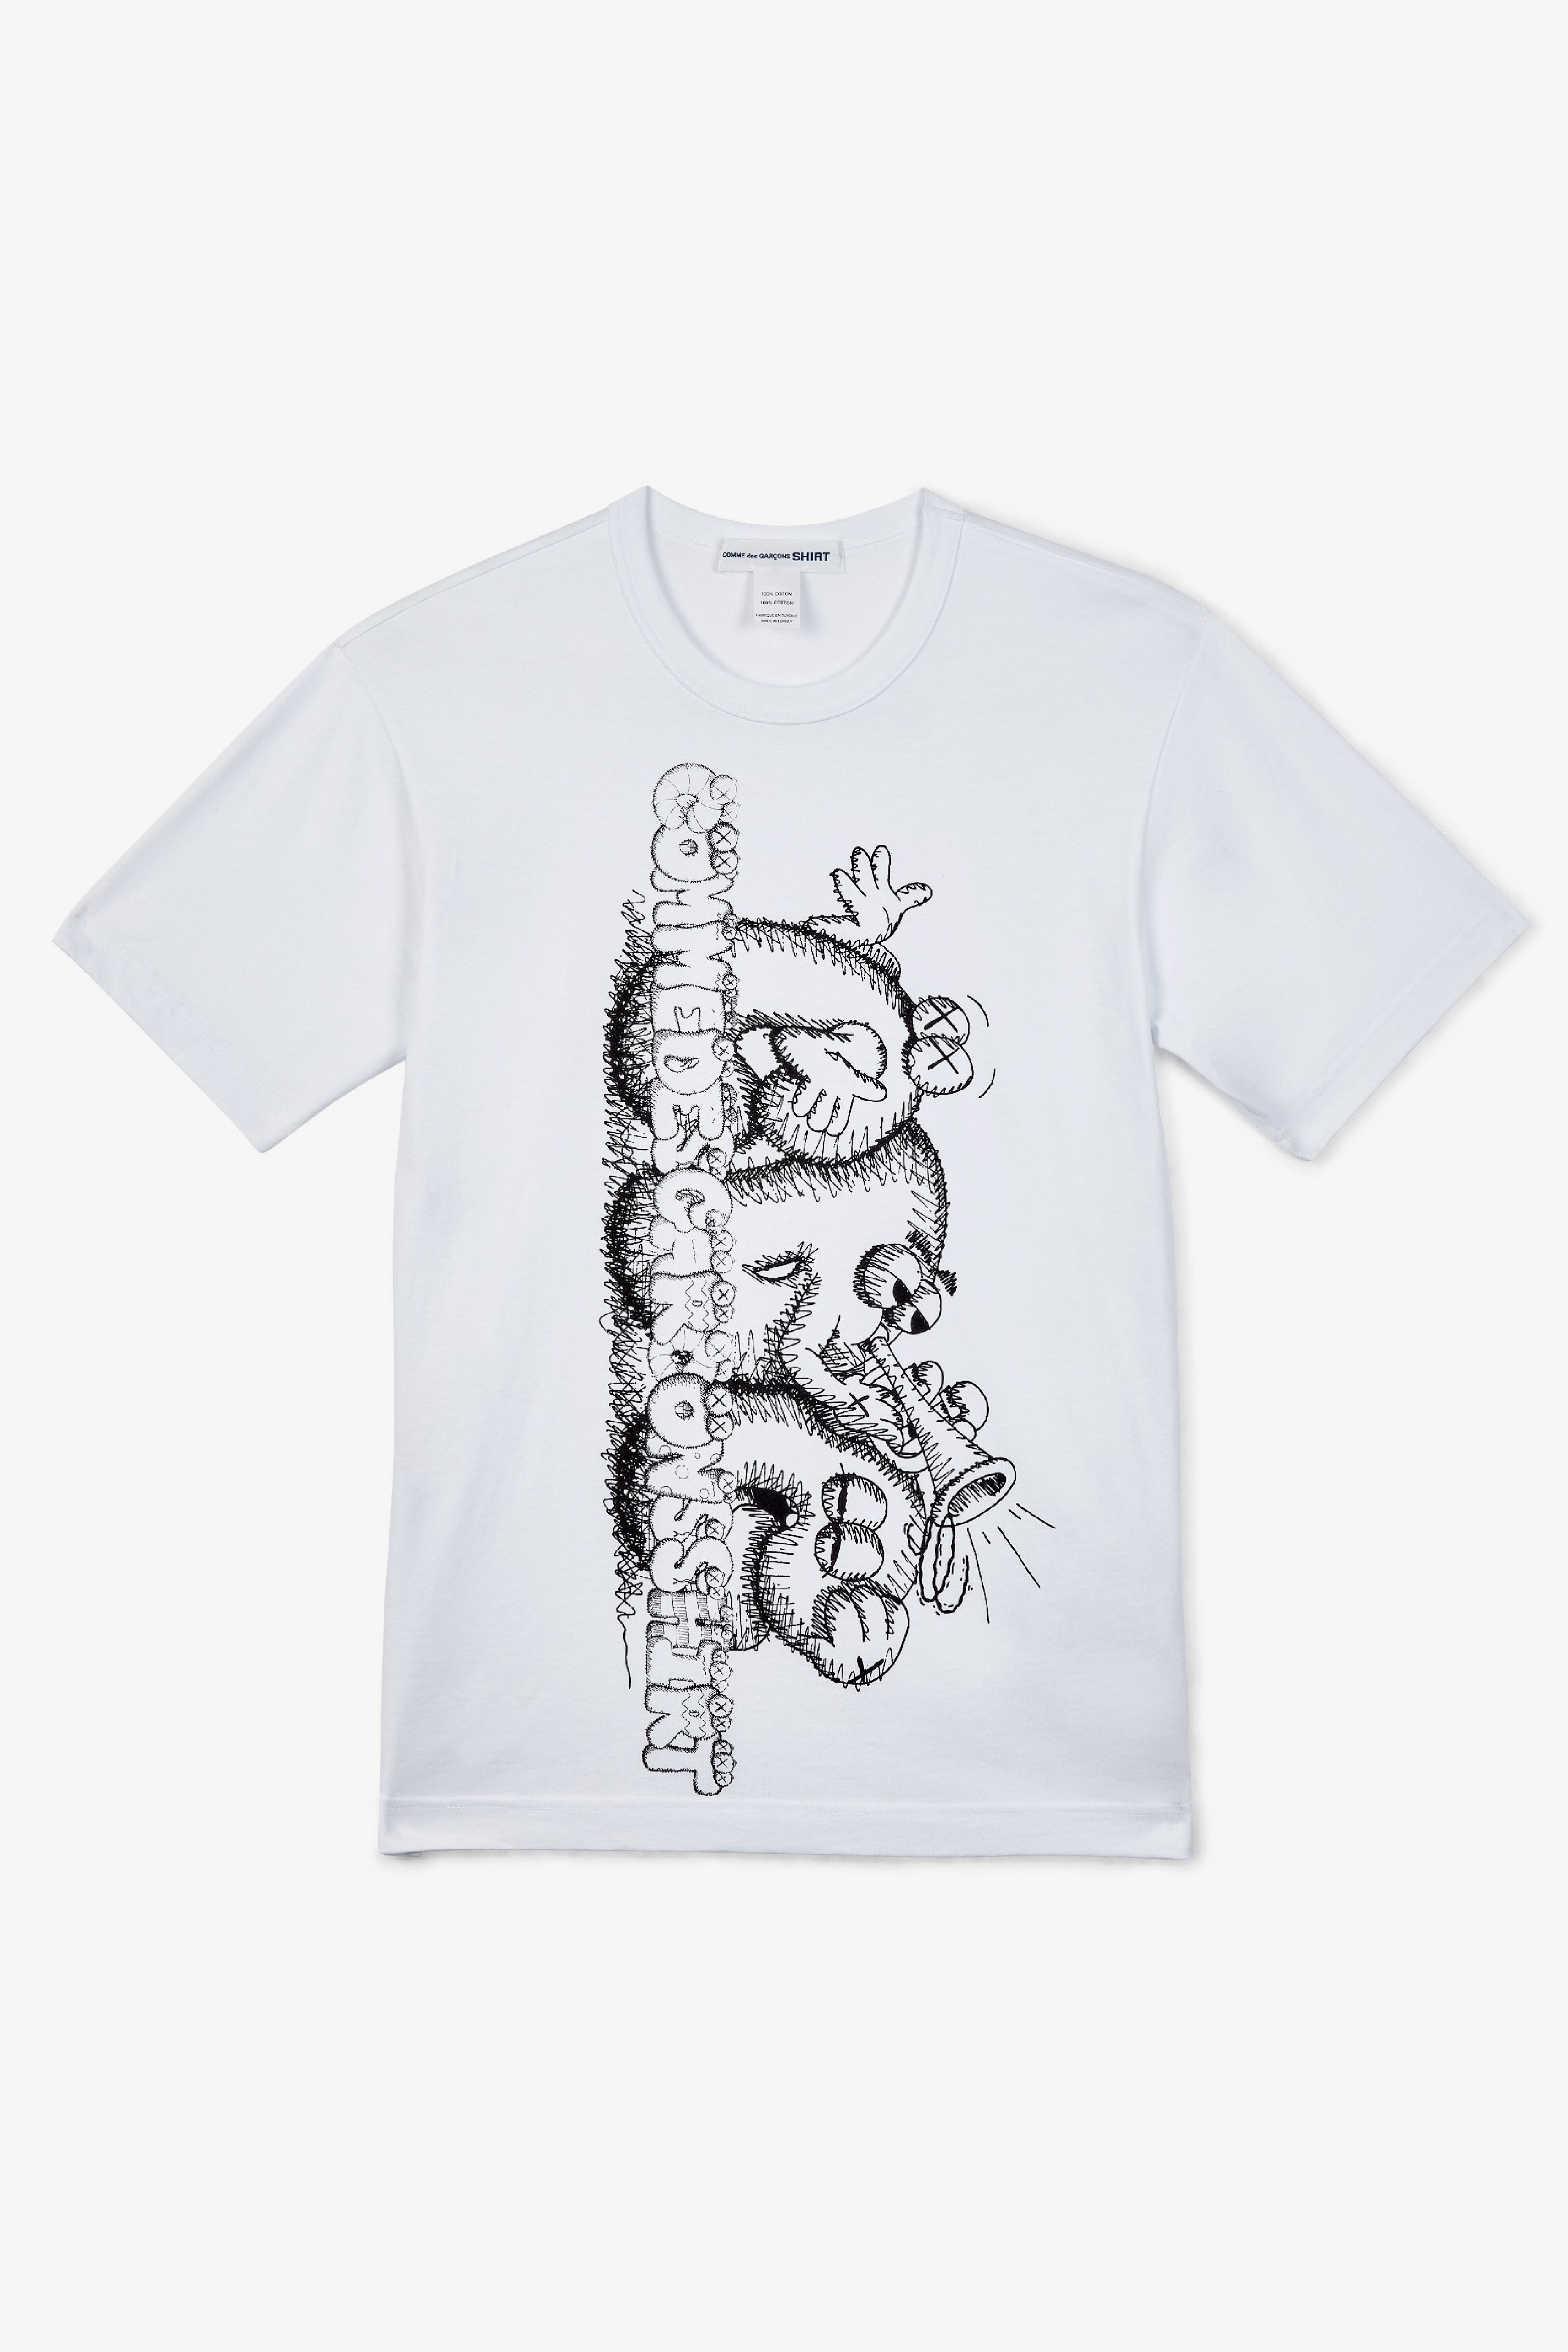 Selectshop FRAME - COMME DES GARCONS SHIRT KAWS T-Shirt (Print 3) T-Shirts Dubai